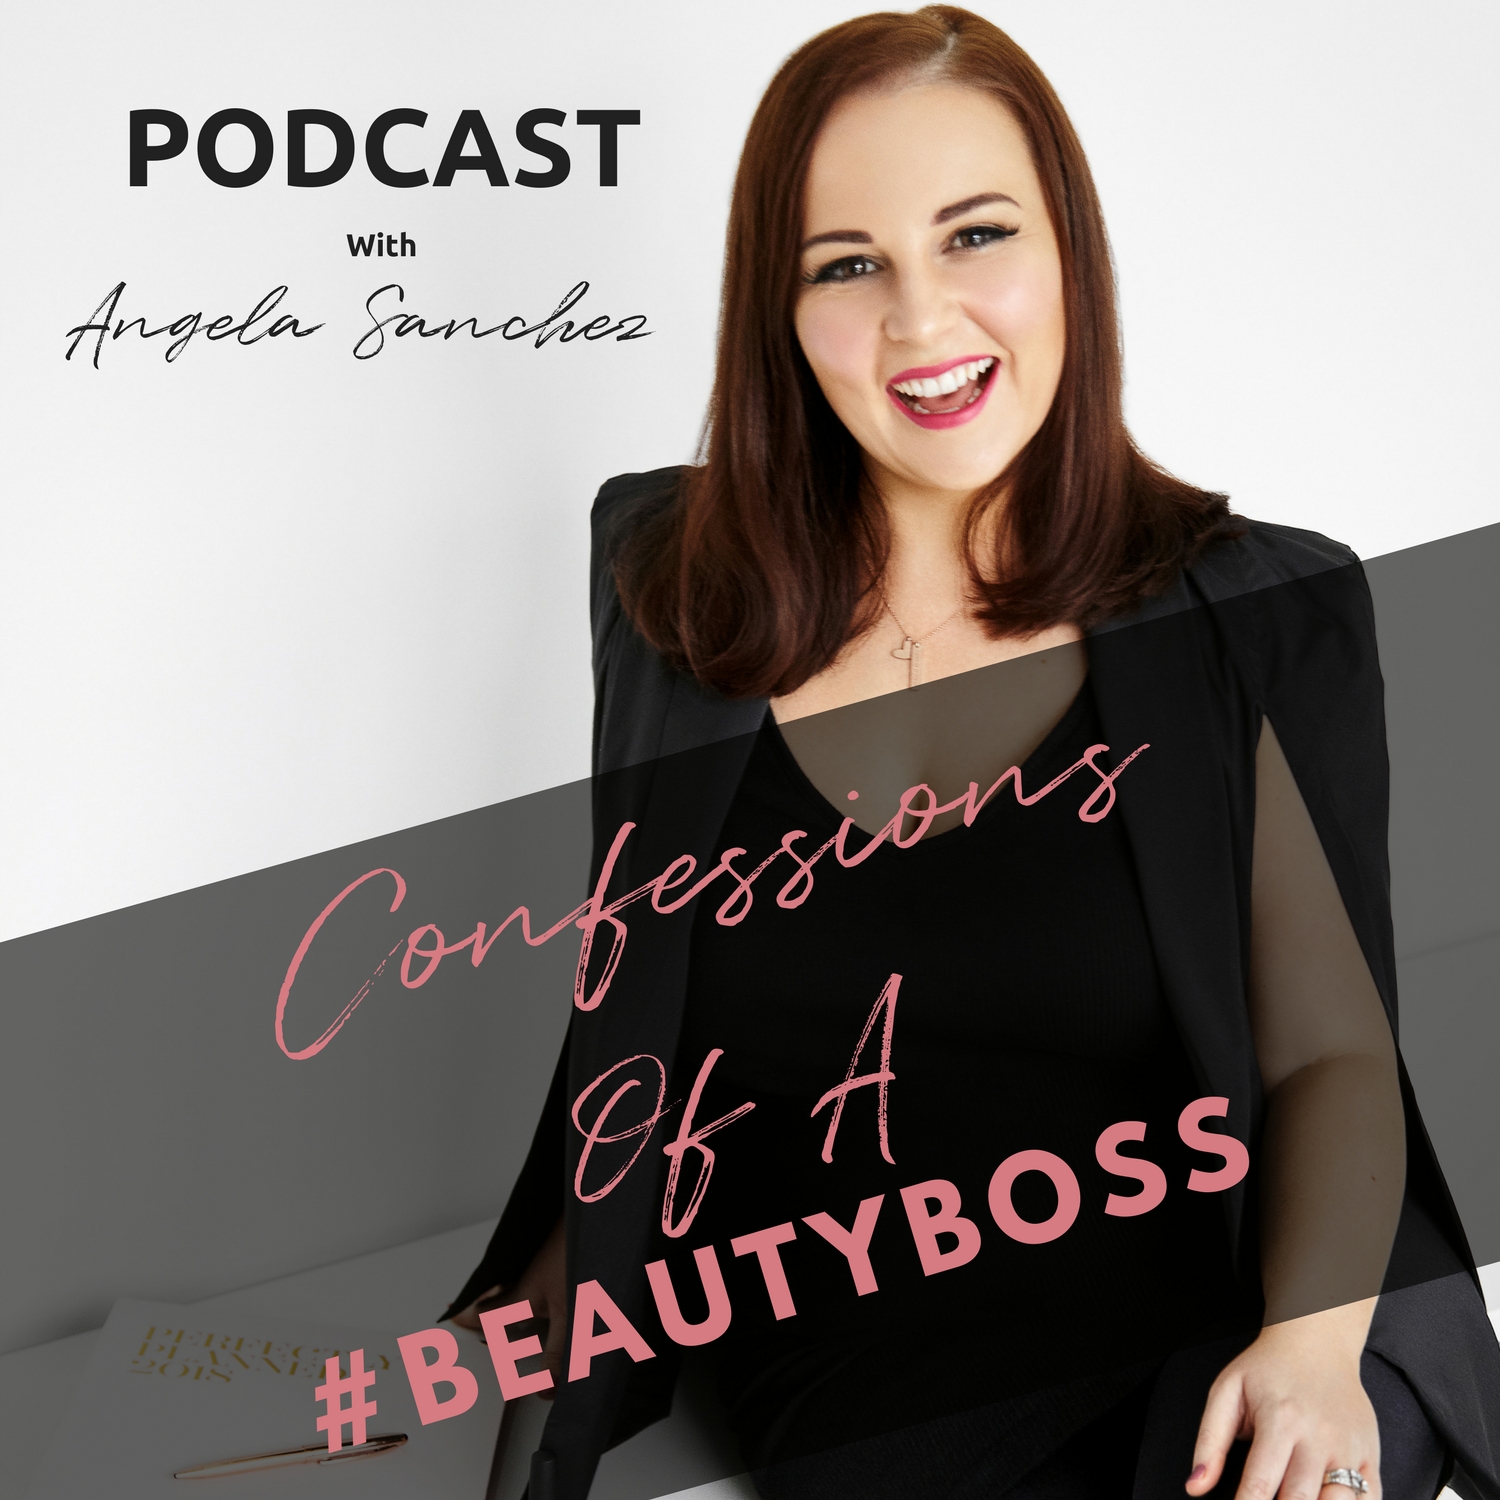 1: Hey There #BeautyBoss - Angela Sanchez